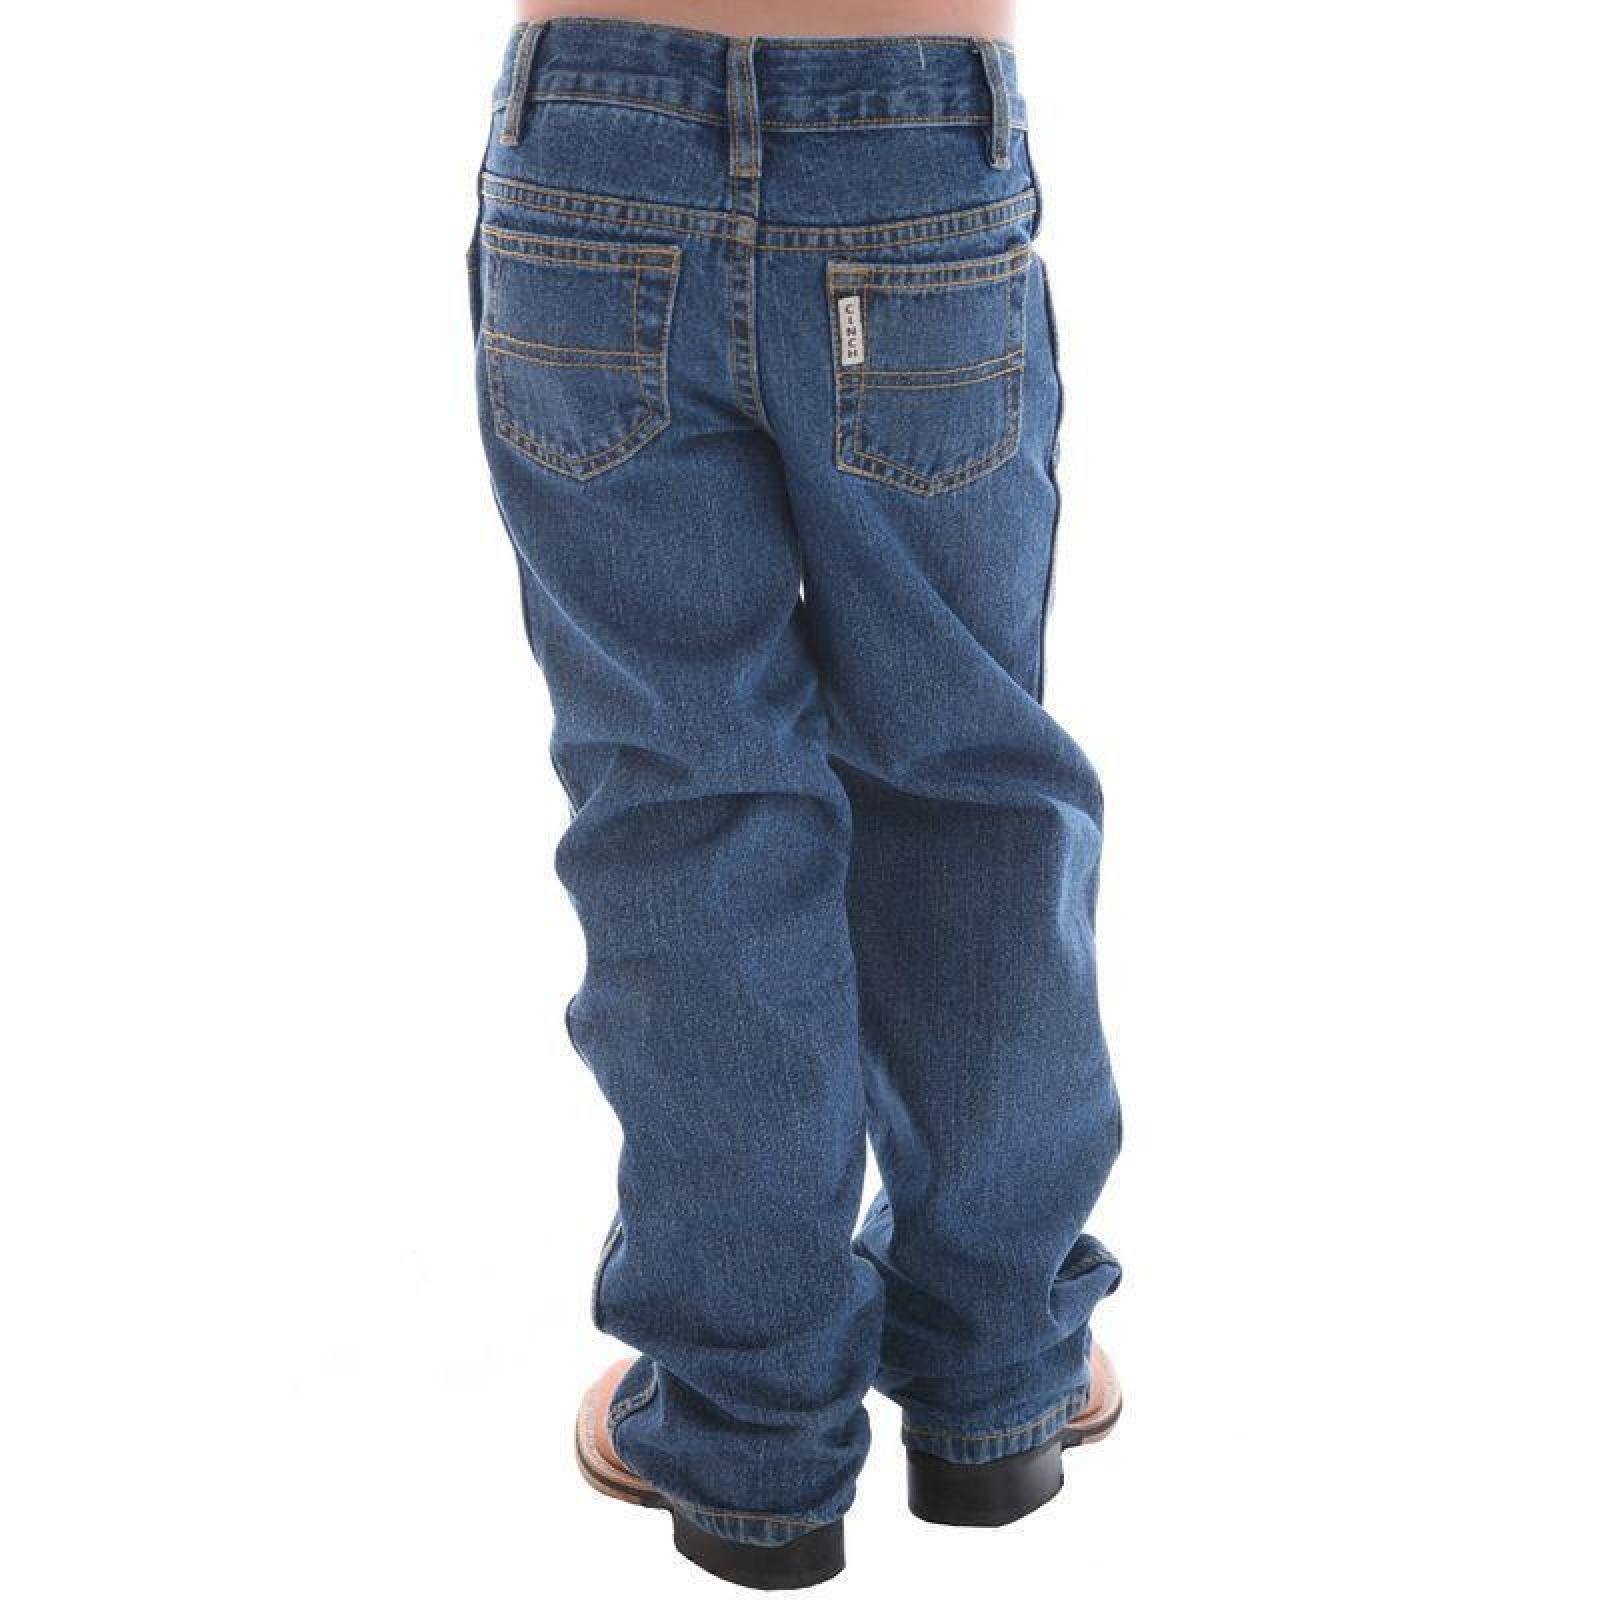 Cinch Boy's Green Label Regular Jeans